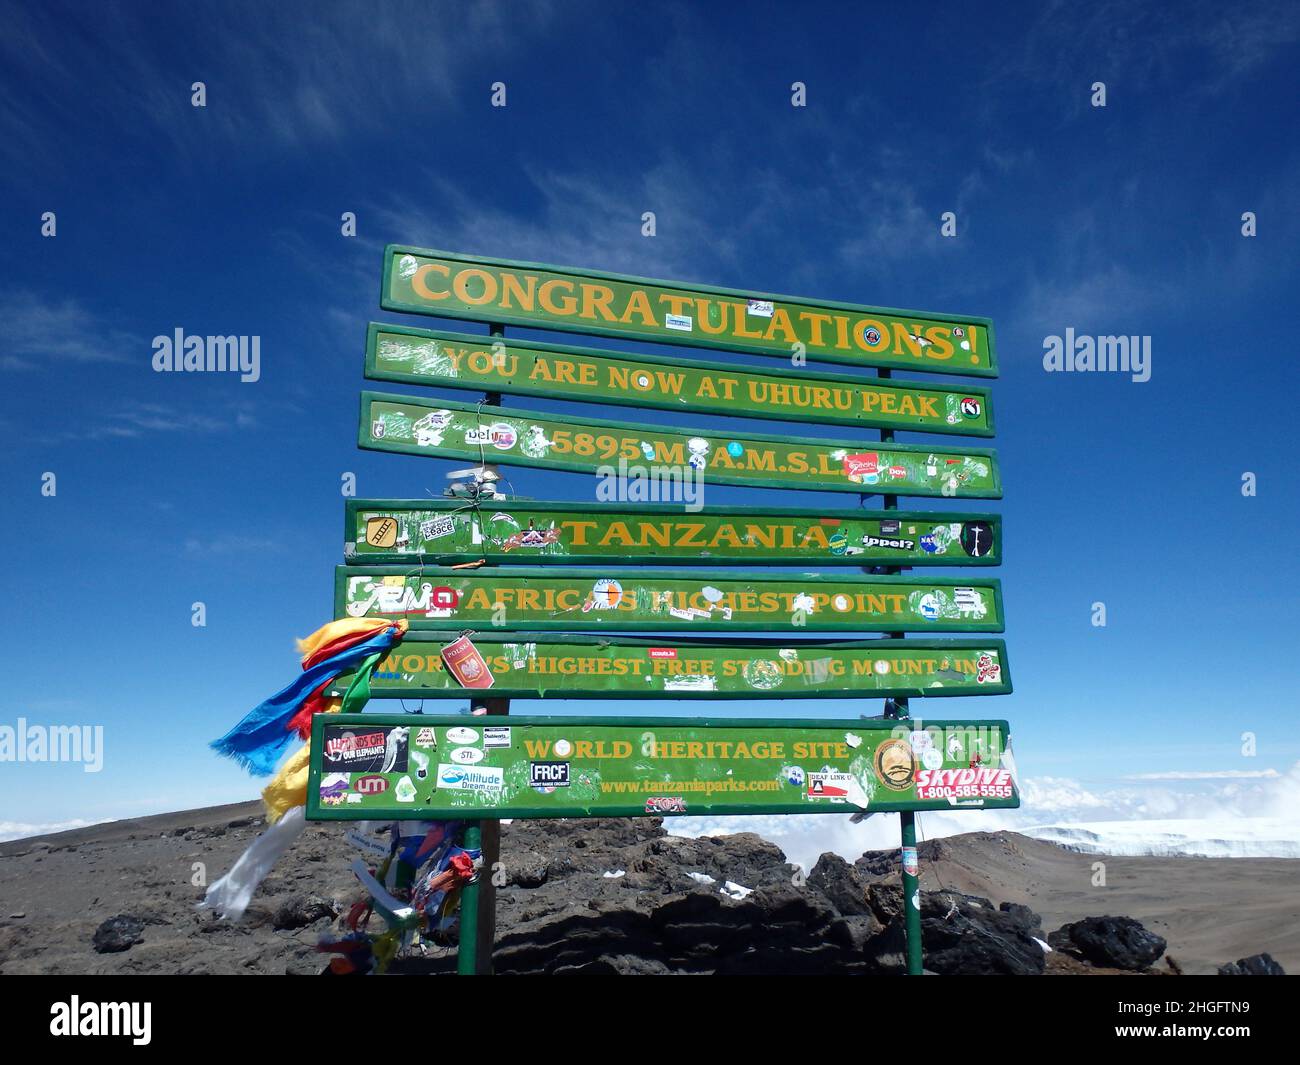 Jim DeLillo Travel writer and photographer climbing Mount Kilimanjaro November 2013 Stock Photo